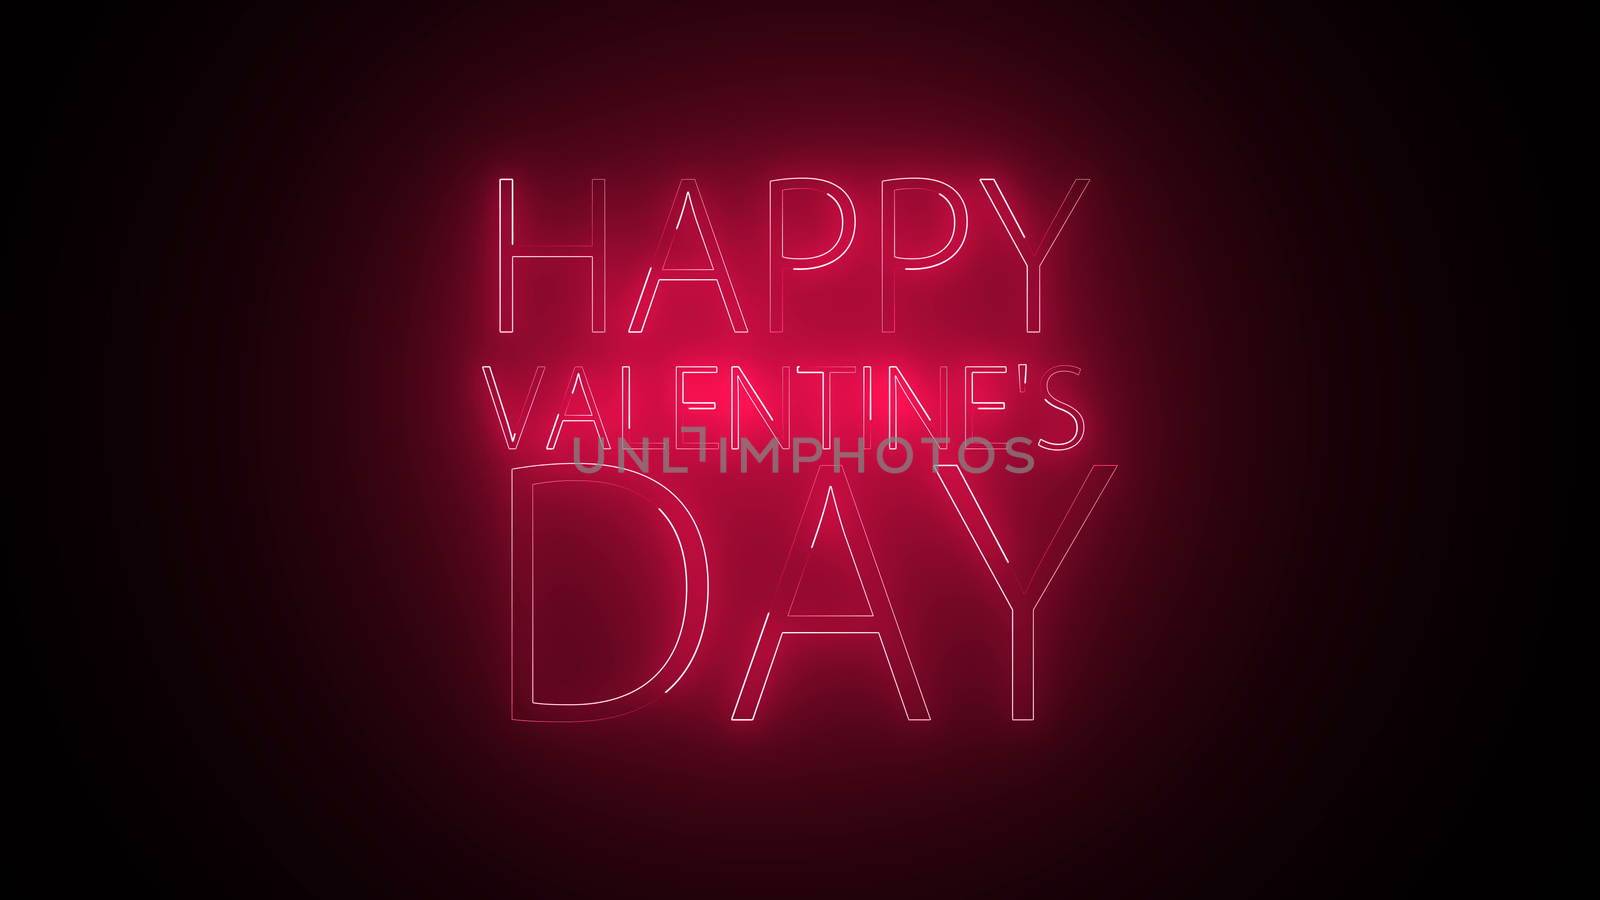 Happy Valentine's Day Text in neon by nolimit046